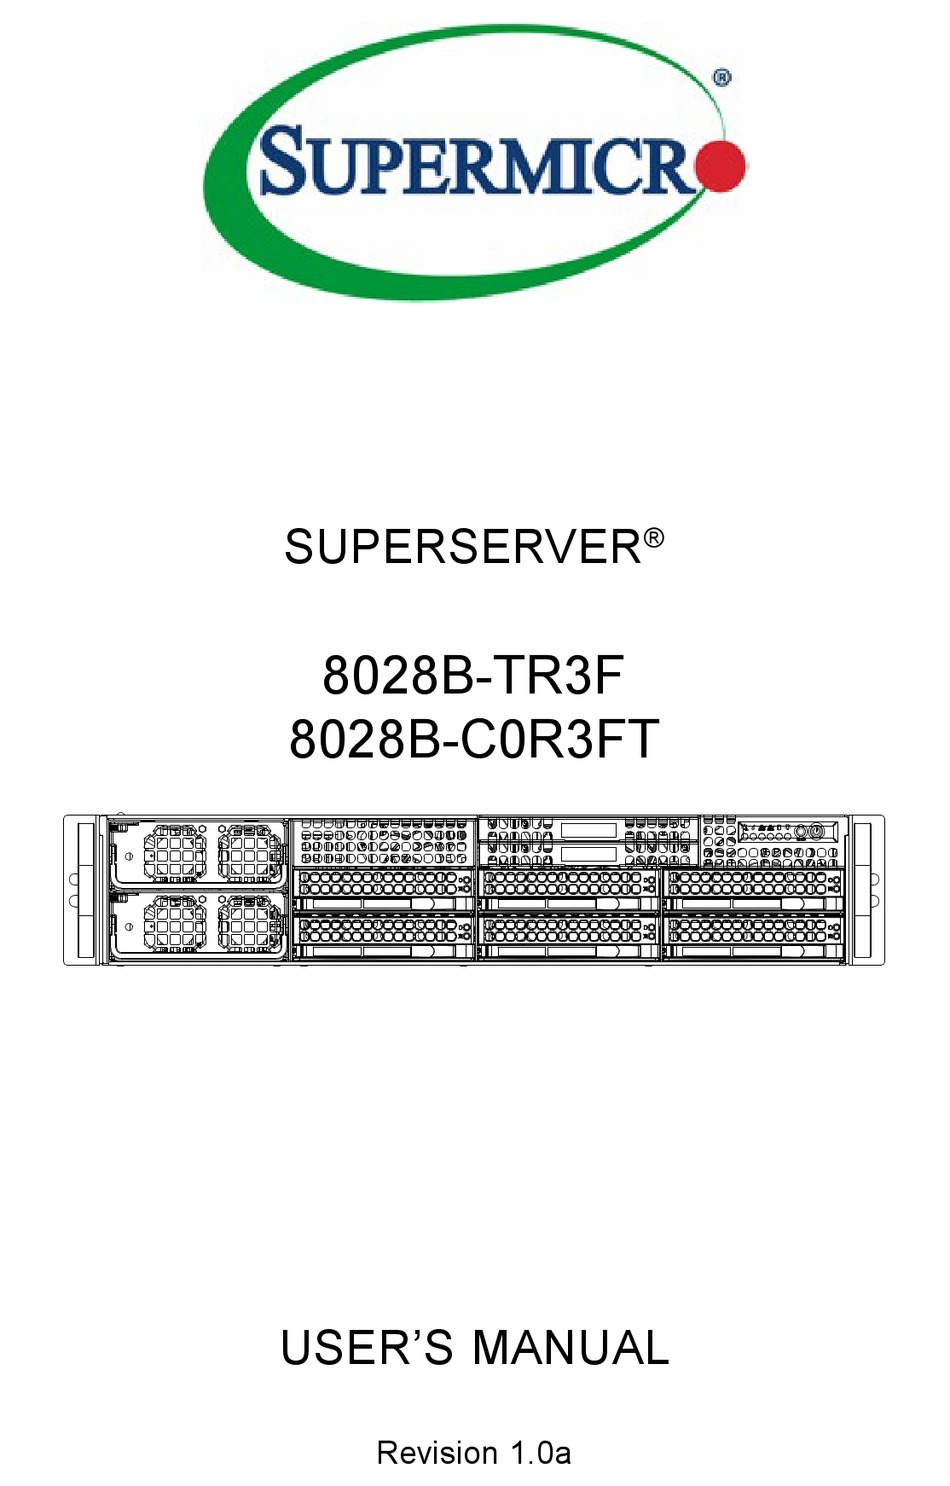 I/O Ports - Supermicro SuperServer 8028B-TR3F User Manual [Page 54] |  ManualsLib